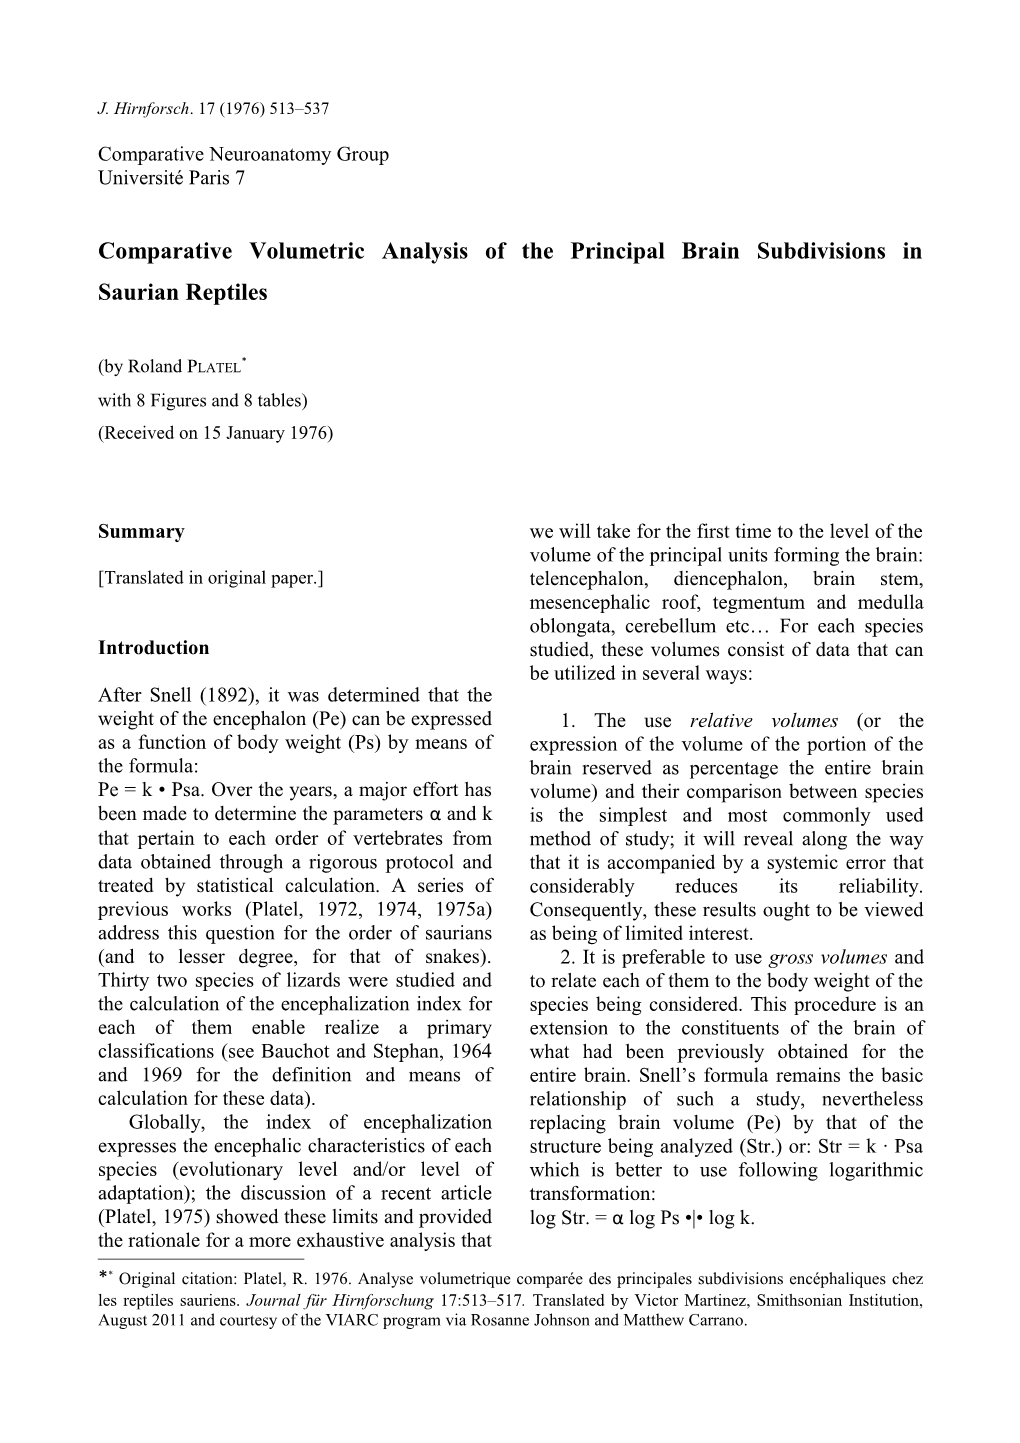 Comparative Volumetric Analysis of the Principal Brain Subdivisions in Saurian Reptiles